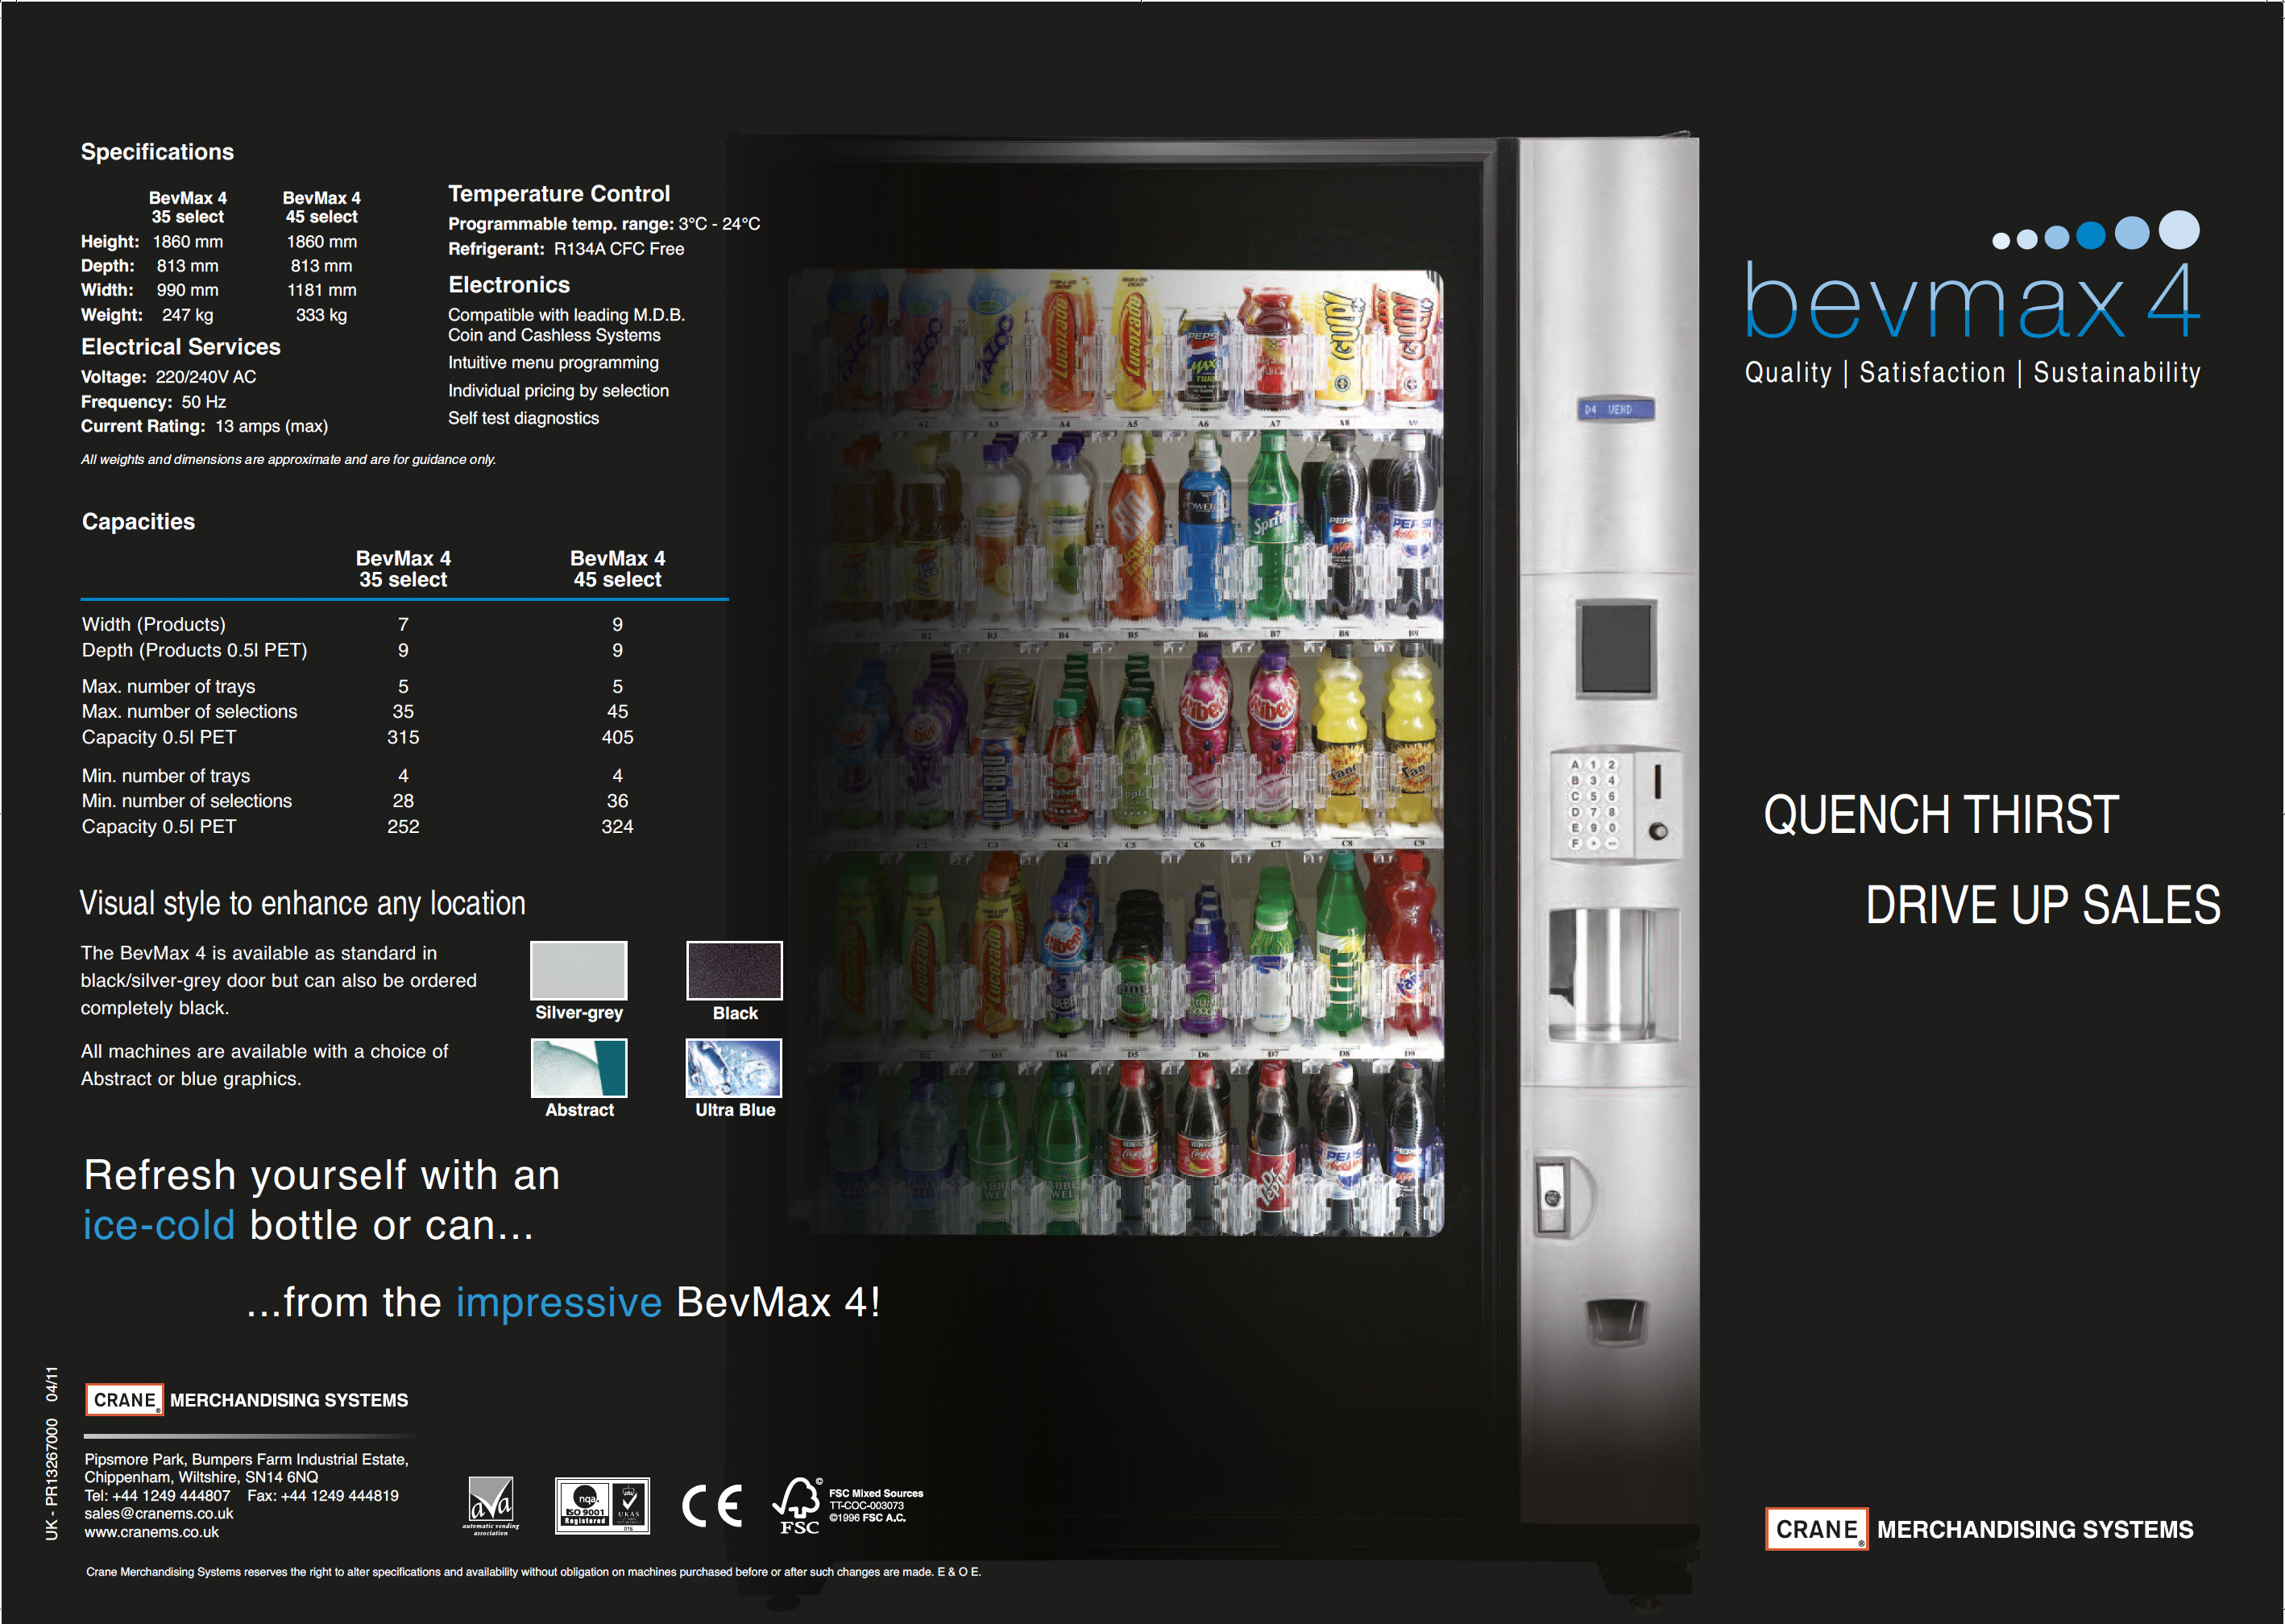 vending machines covnetry